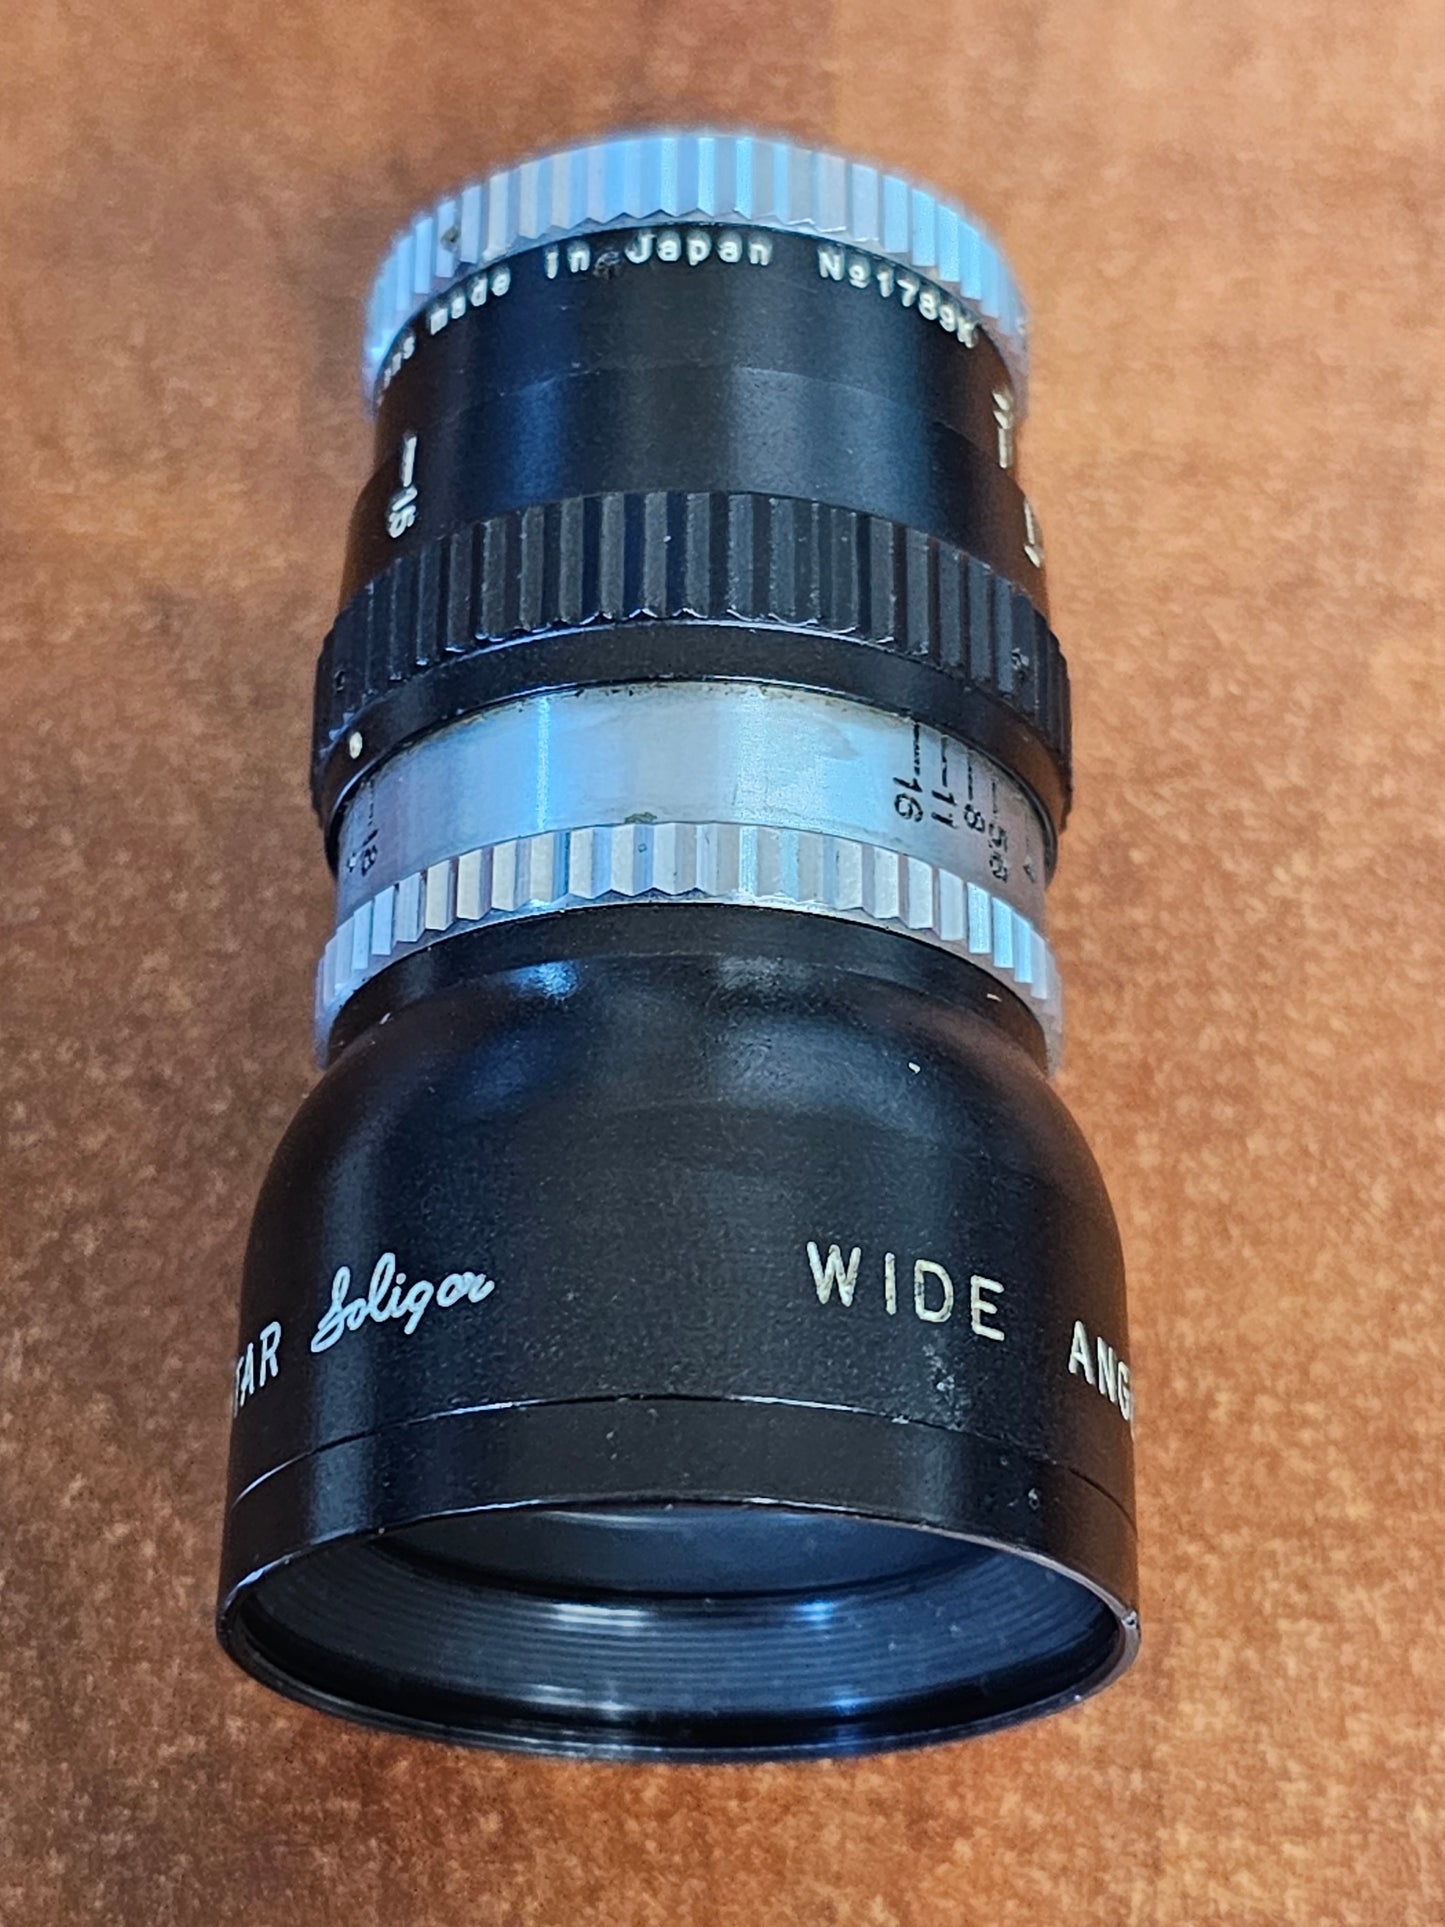 Elitar Soligor 10mm F1.8 C-Mount Wide Angle Lens S# 1789K